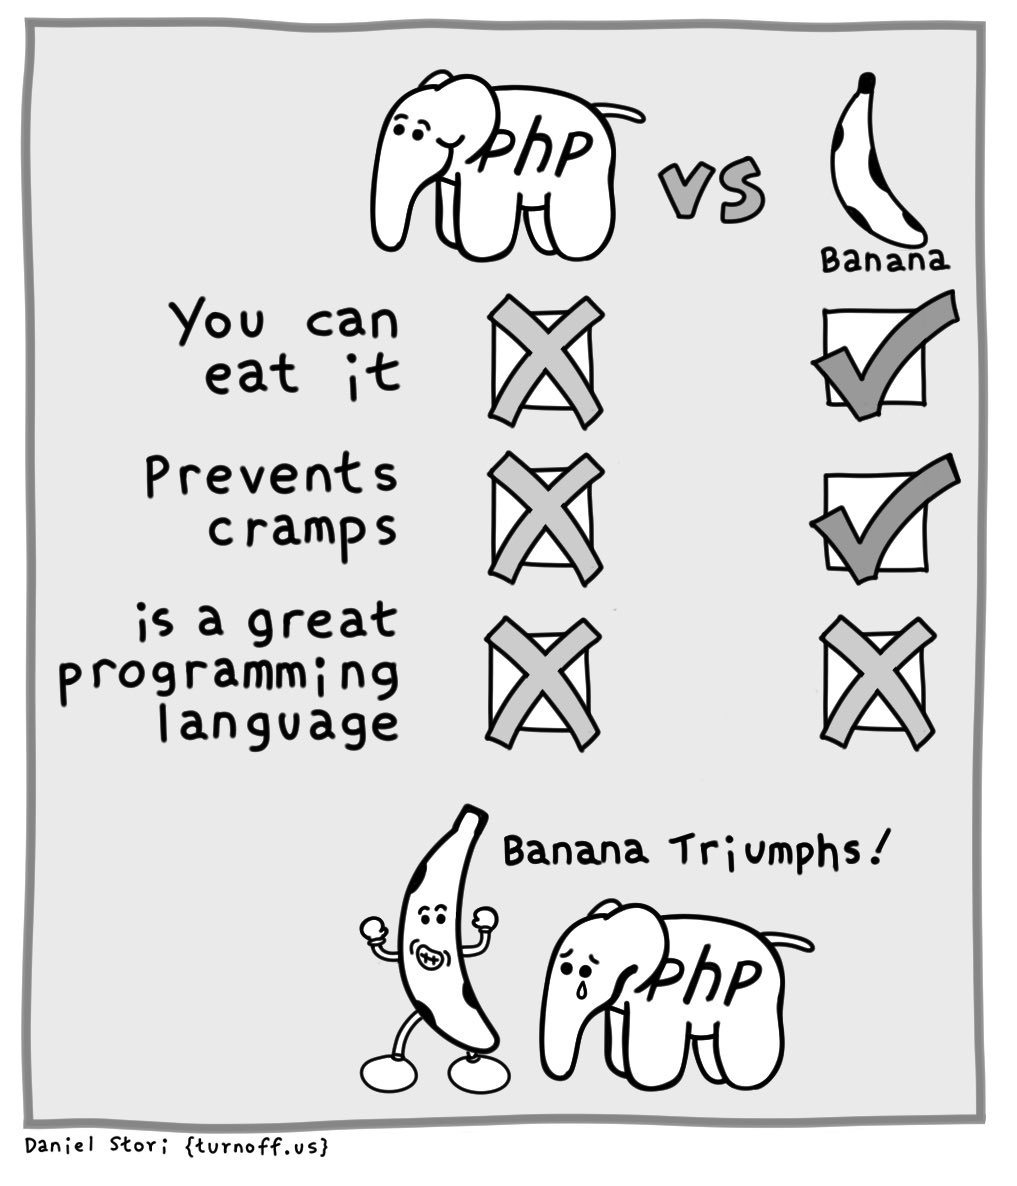 php vs banana geek comic